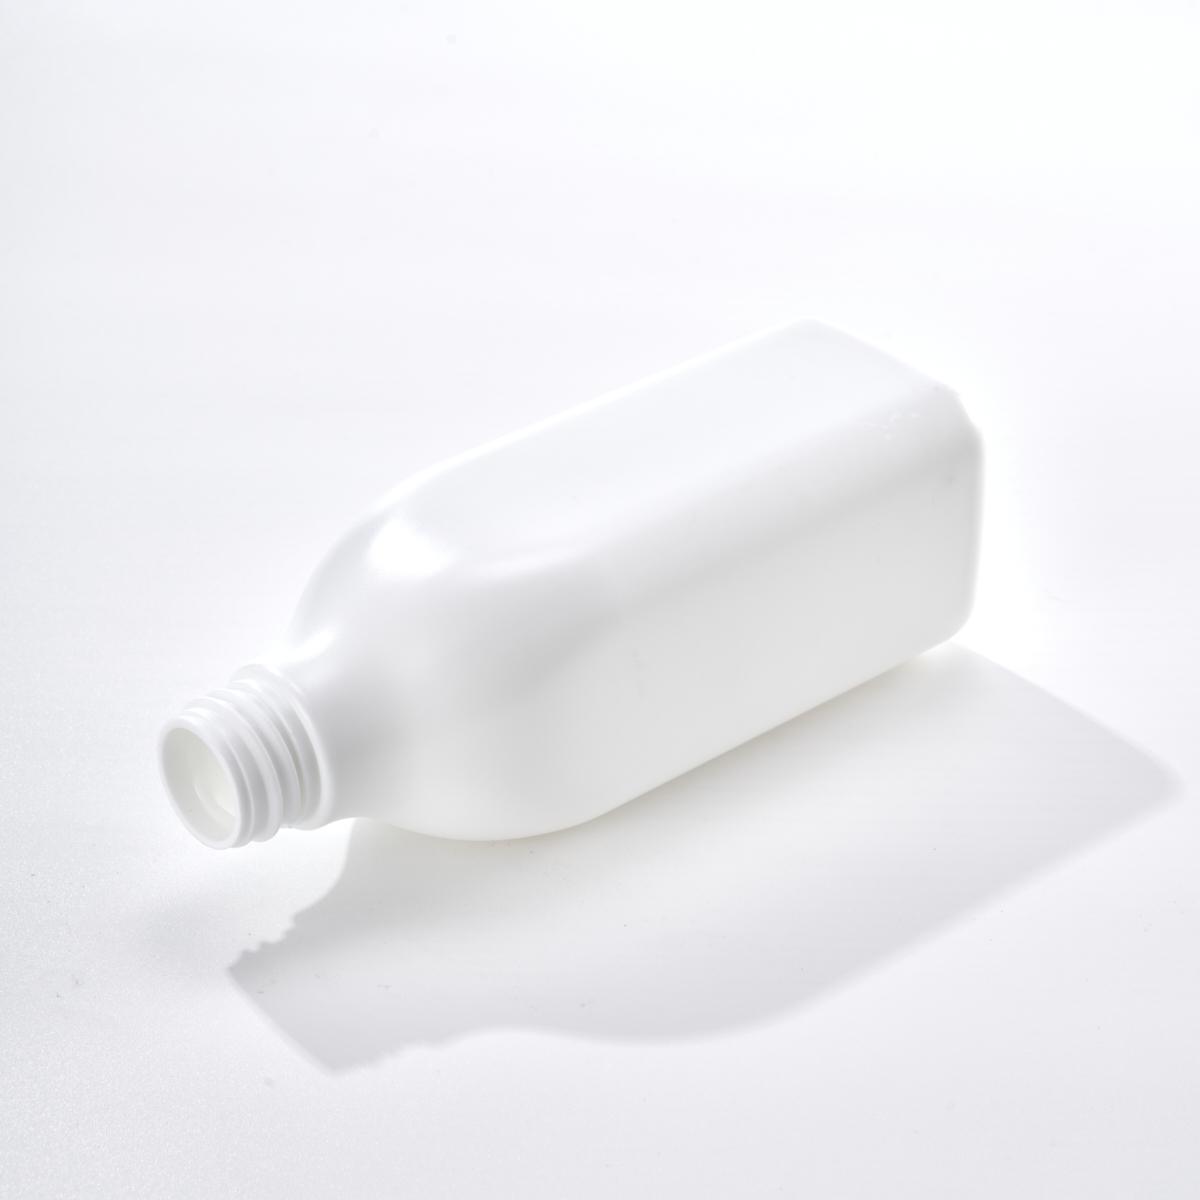 hdpe white bottle